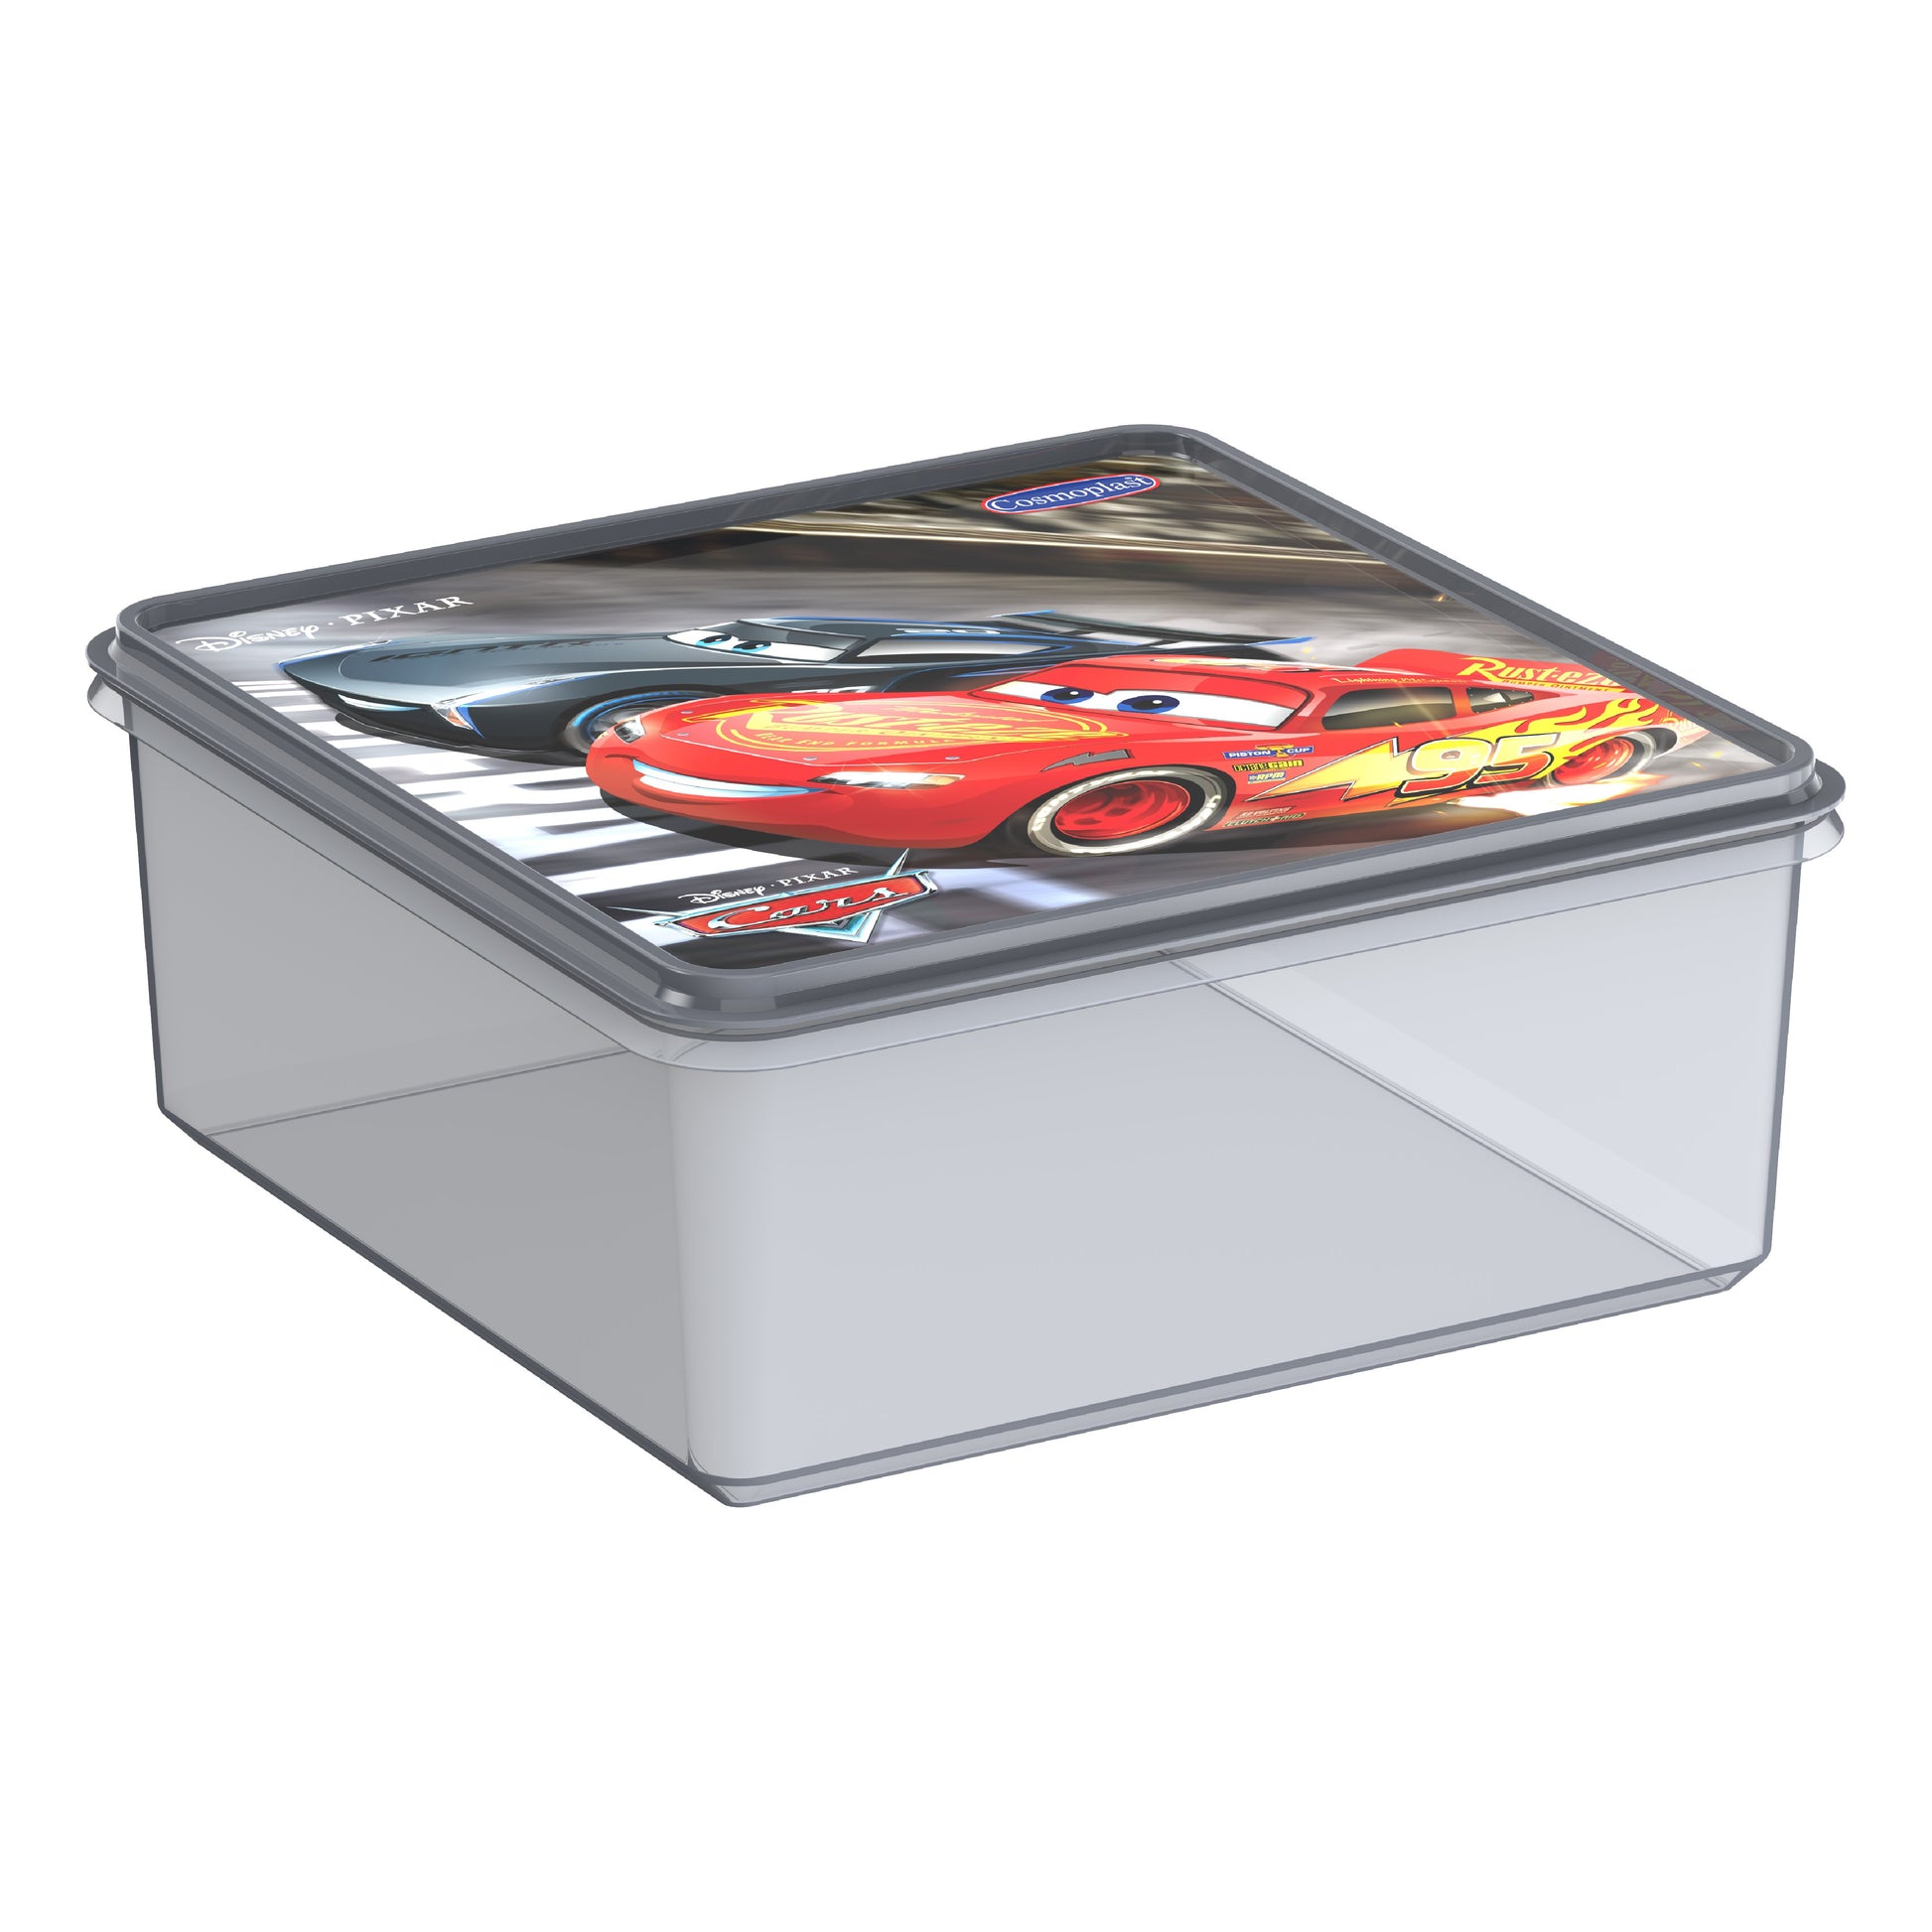 Cosmoplast Disney Pixar Cars Storage Box 10 Liters